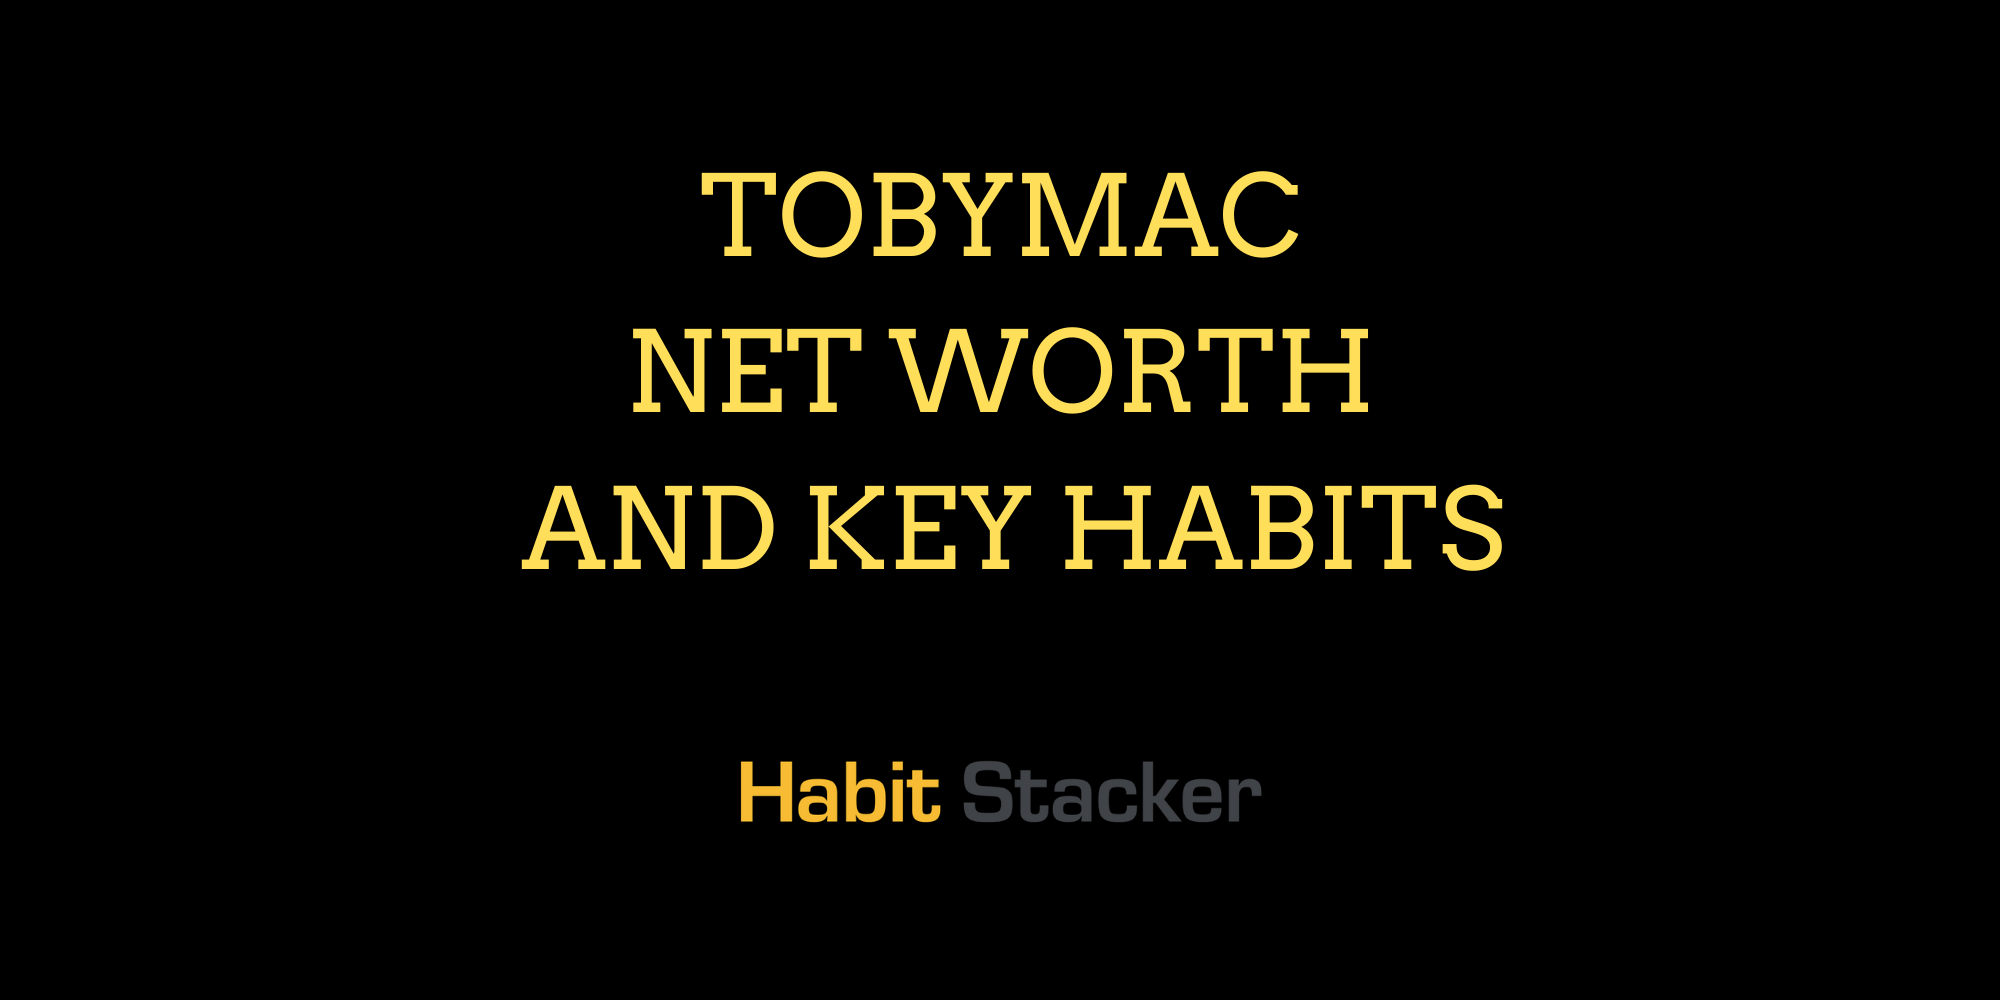 Tobymac Net Worth and Key Habits